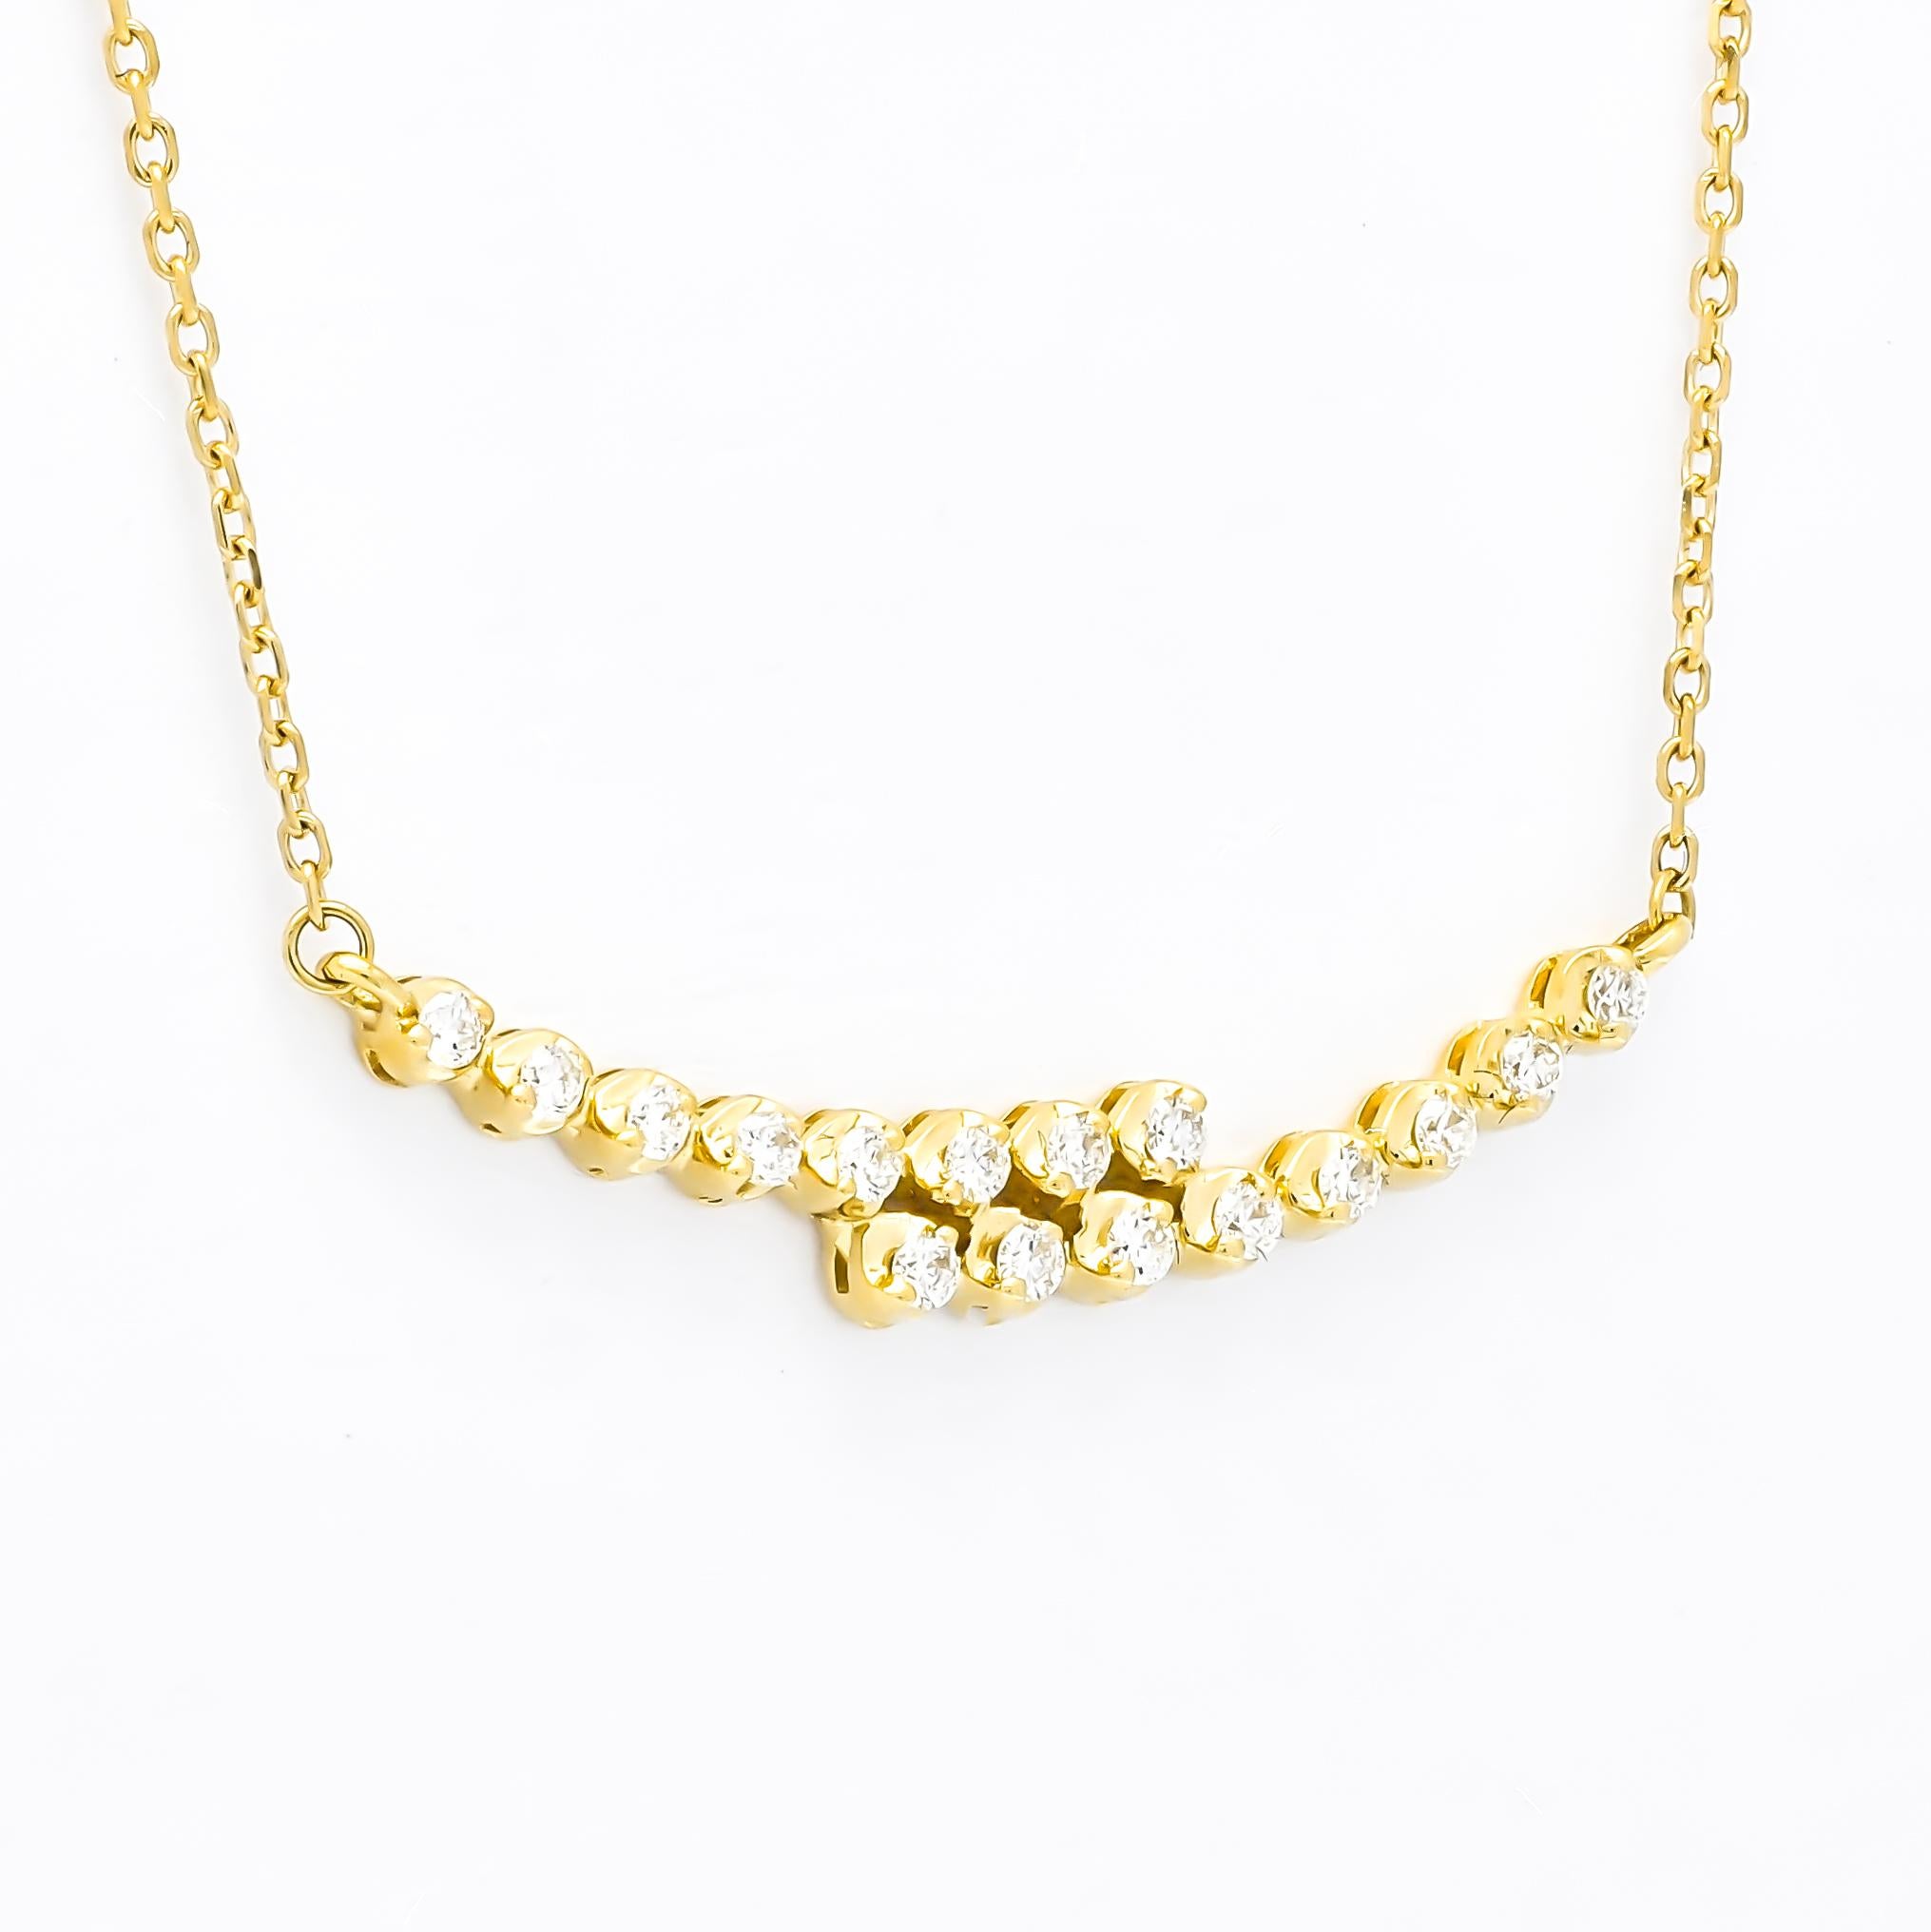 Round Cut Natural Diamond 0.20 carats 18 Karat Yellow Gold Bar Chain Necklace  For Sale